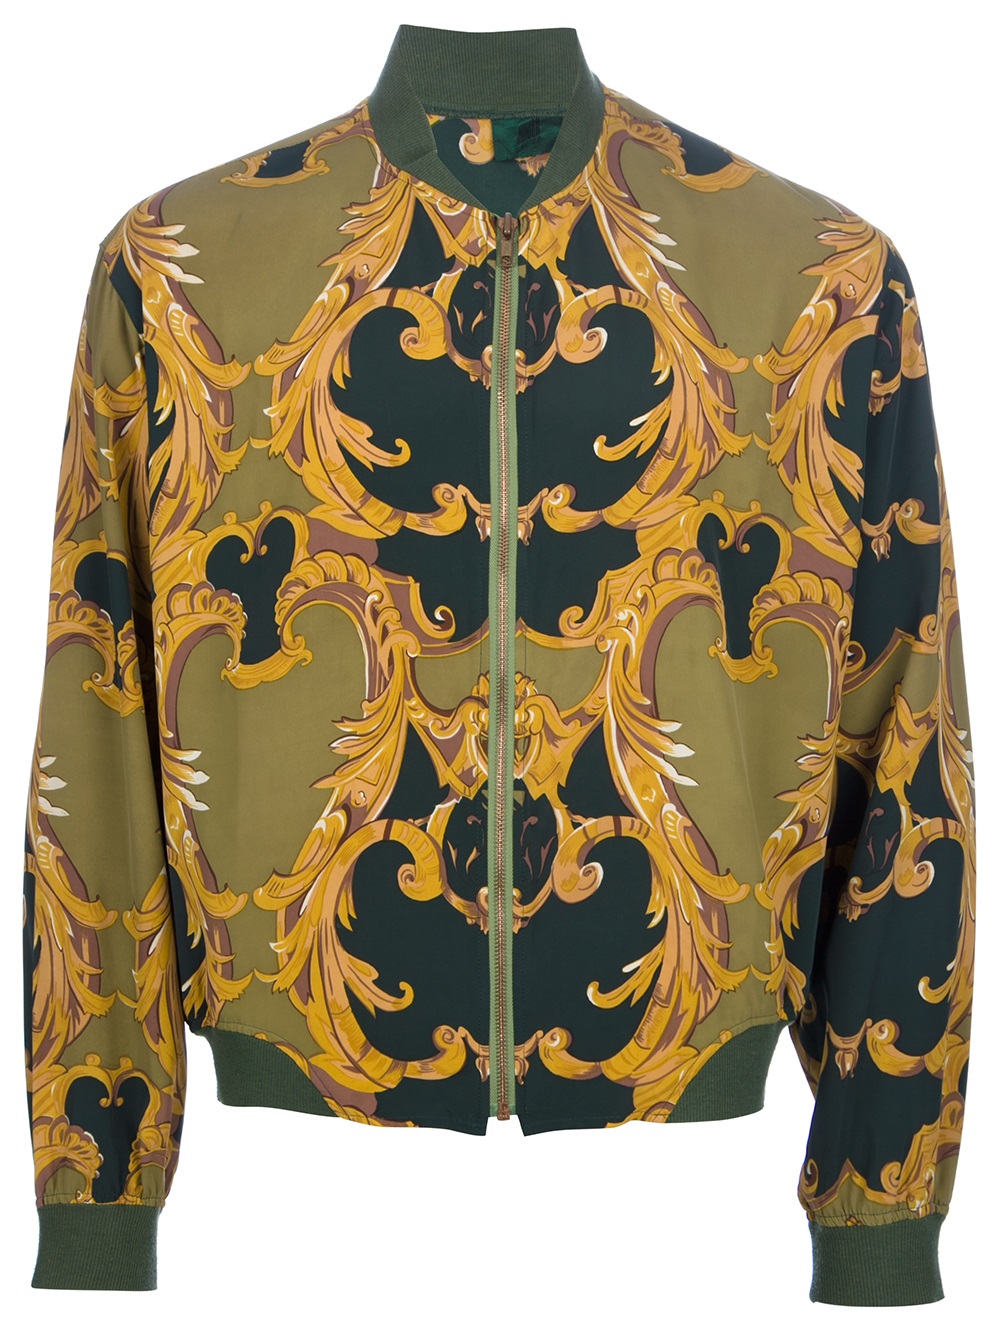 Lyst - Jean Paul Gaultier Baroque Print Bomber Jacket in Green for Men